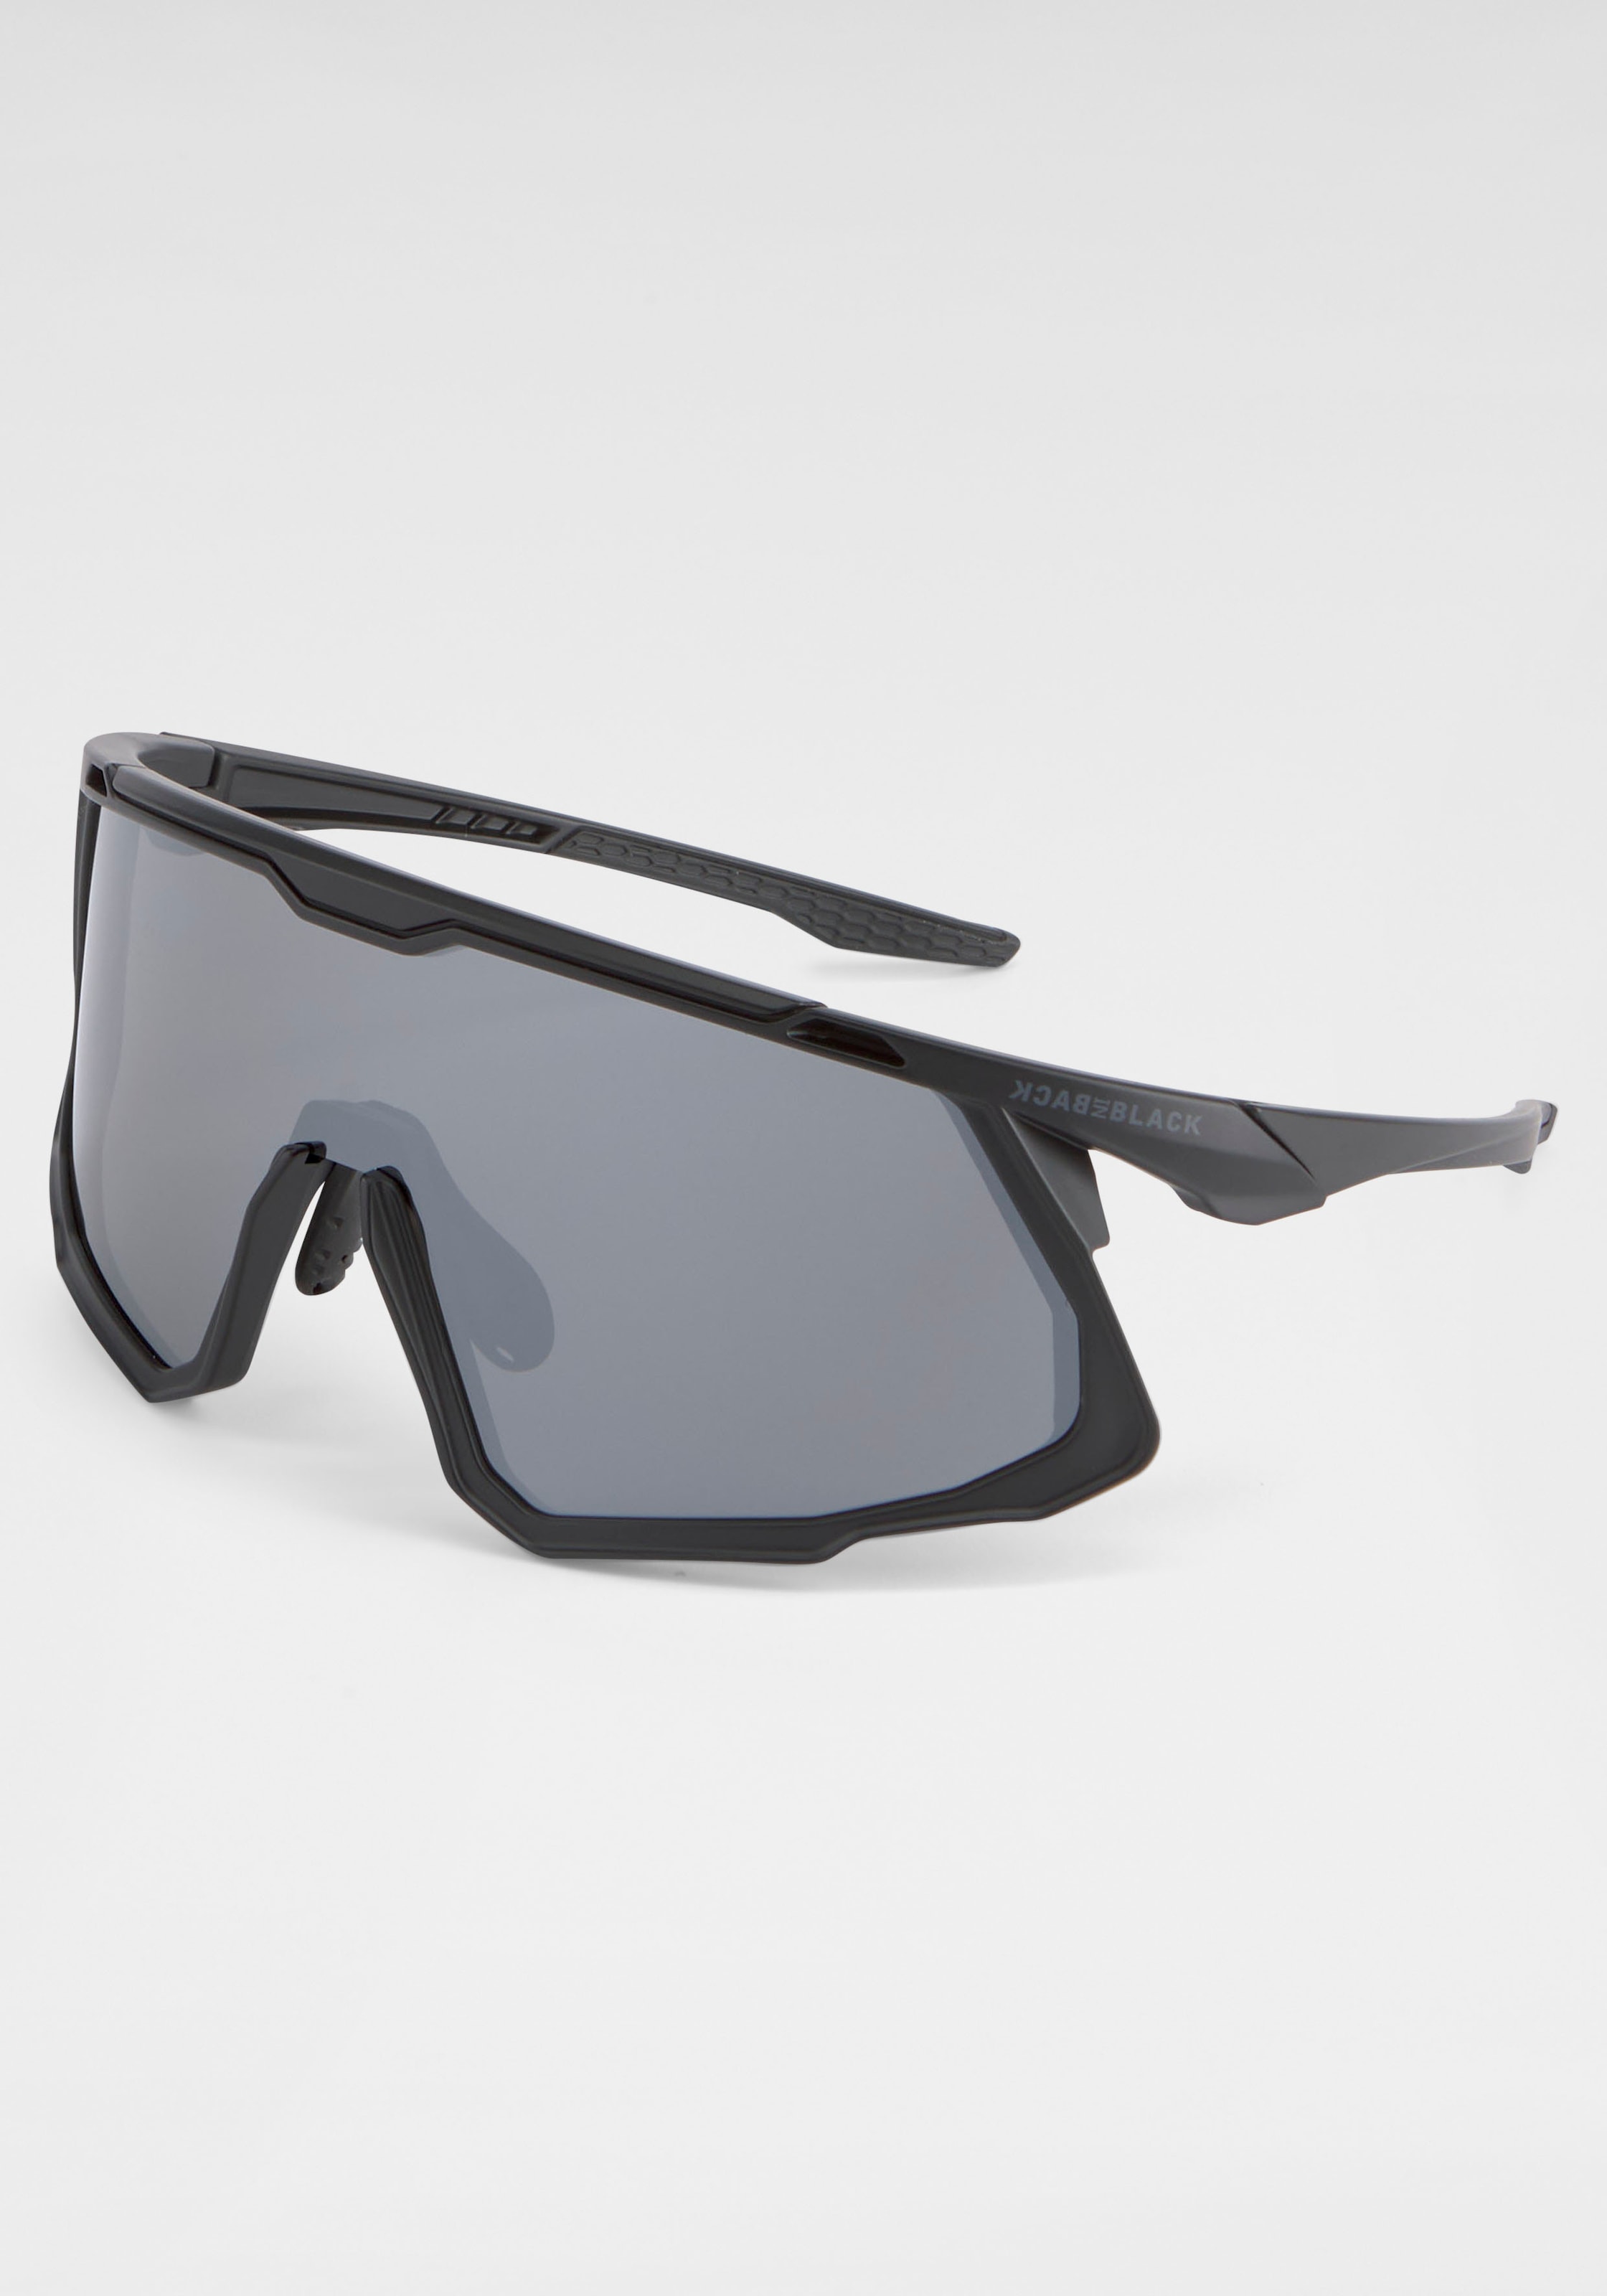 BACK IN BLACK Eyewear Form Sonnenbrille, online gebogene